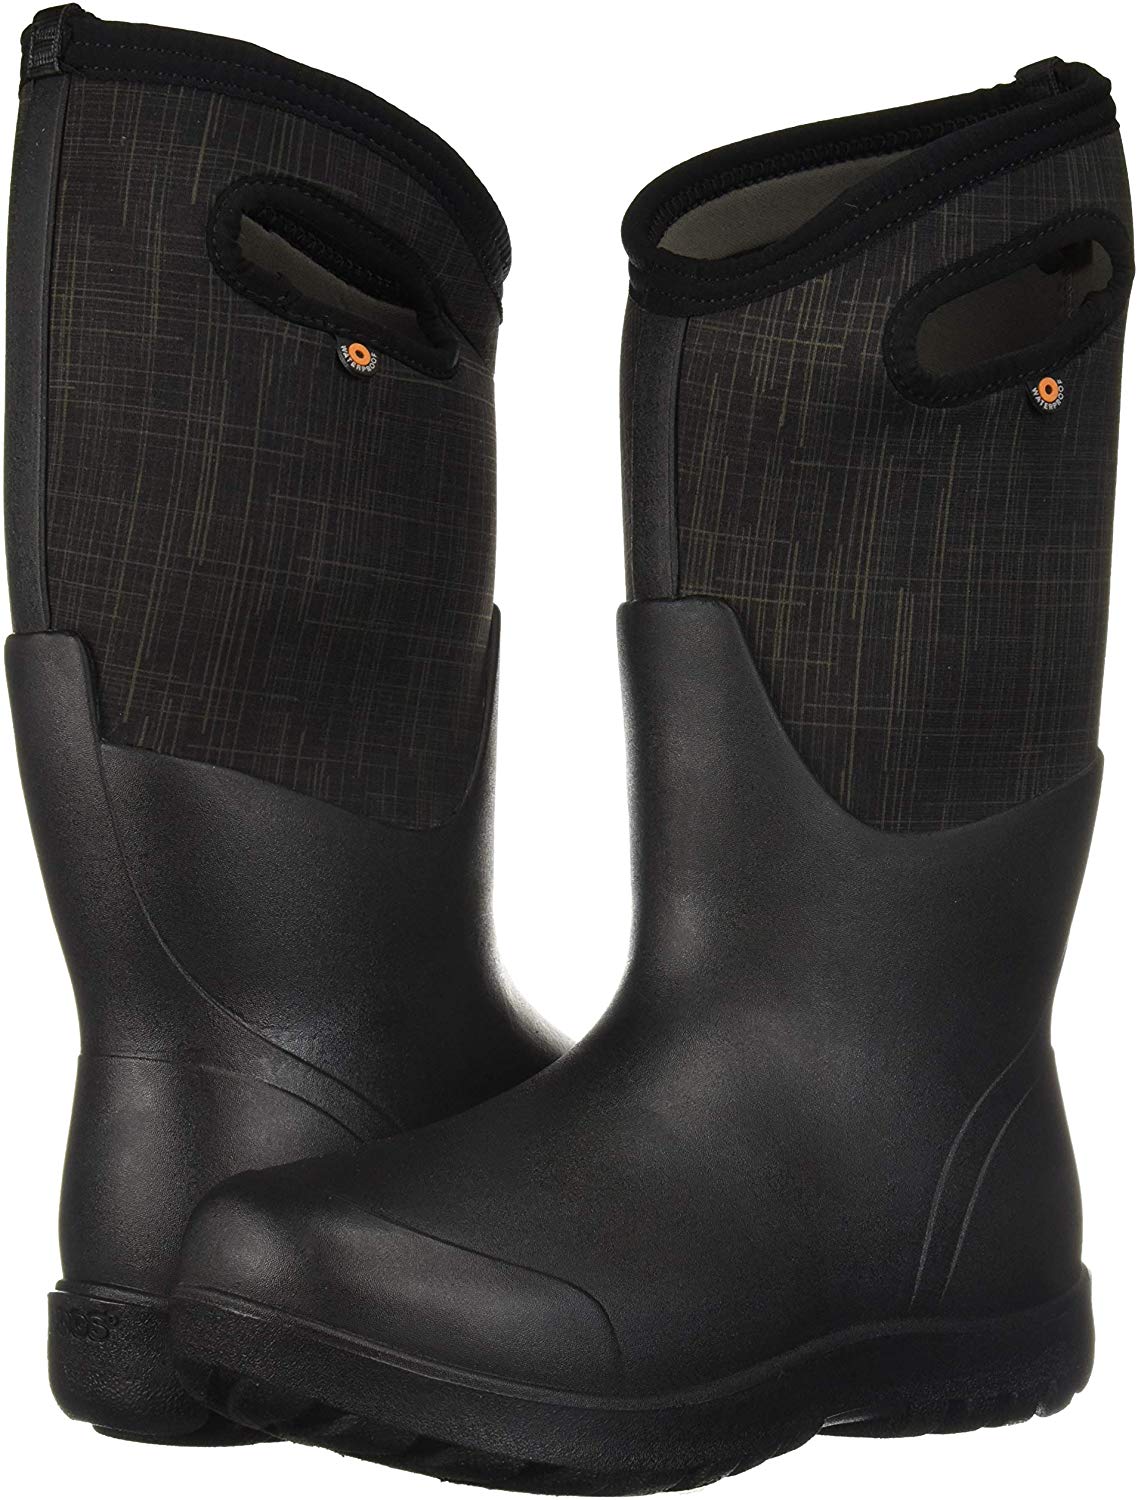 Bogs Women&#39;s Neo-Classic Snow Boot, Black, Size 8.0 0pff 603246612770 | eBay